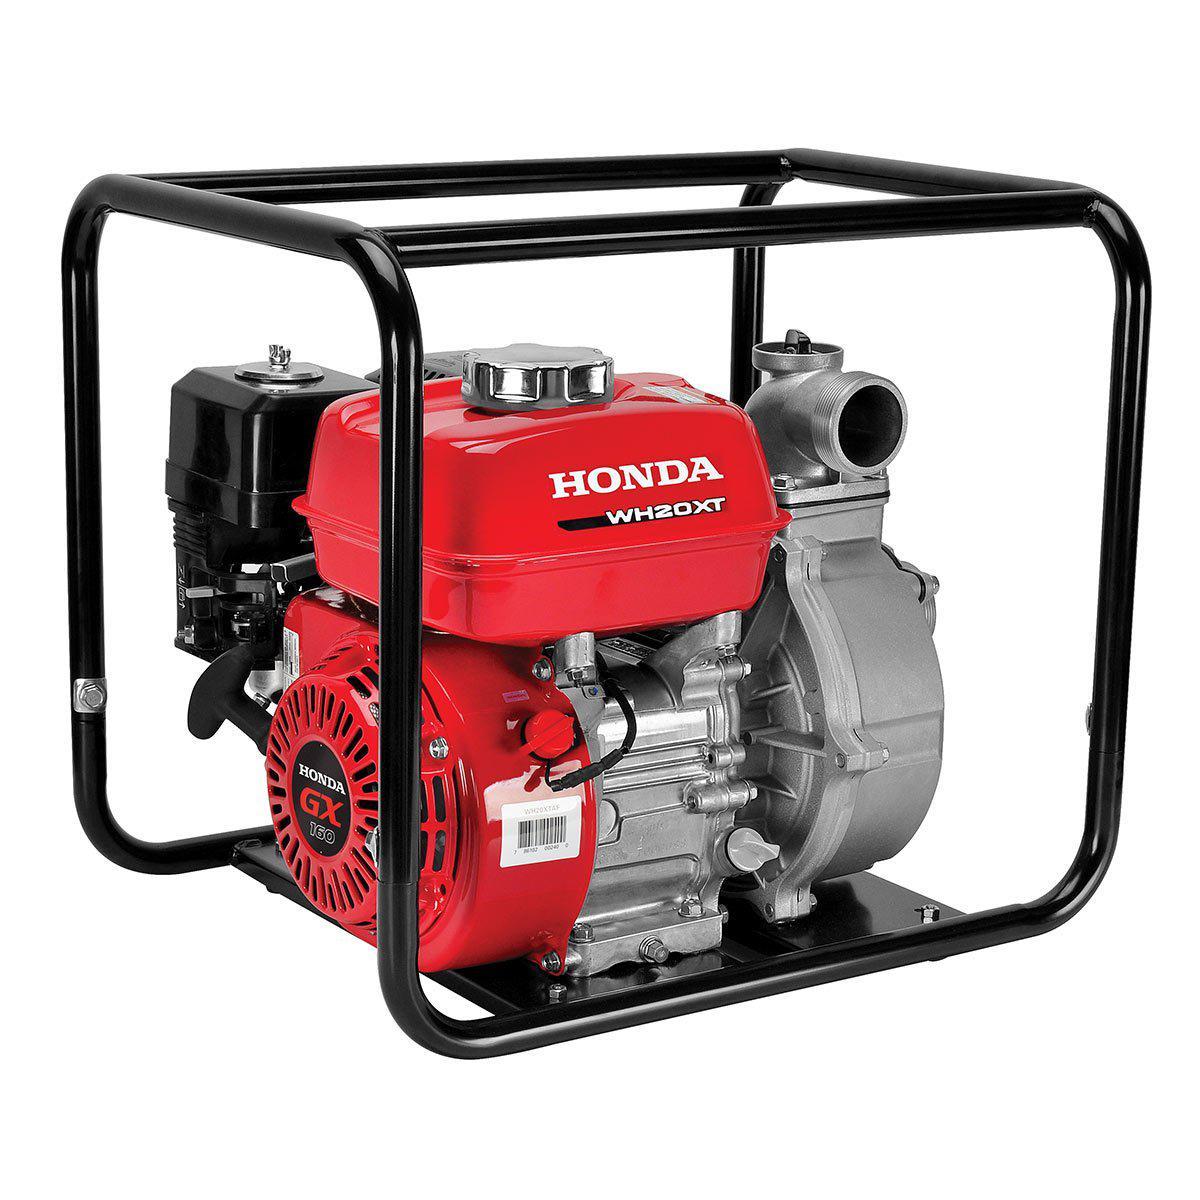 Honda WH20XTAF - 119 GPM (2") High Pressure Water Pump